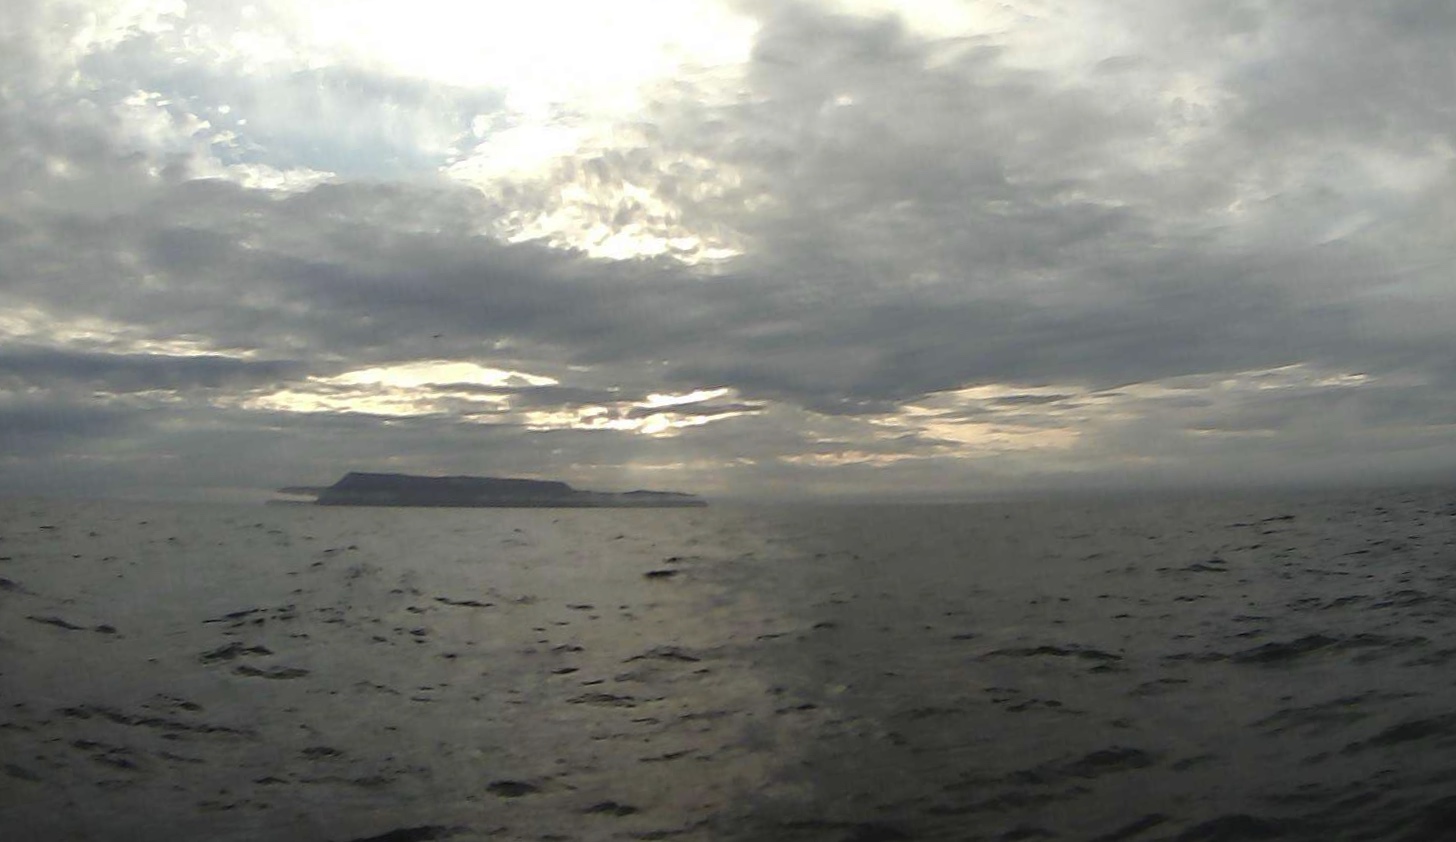 Drone view: A saildrone passes Little & Big Diomede Islands, of Alaska's Bering Sea.